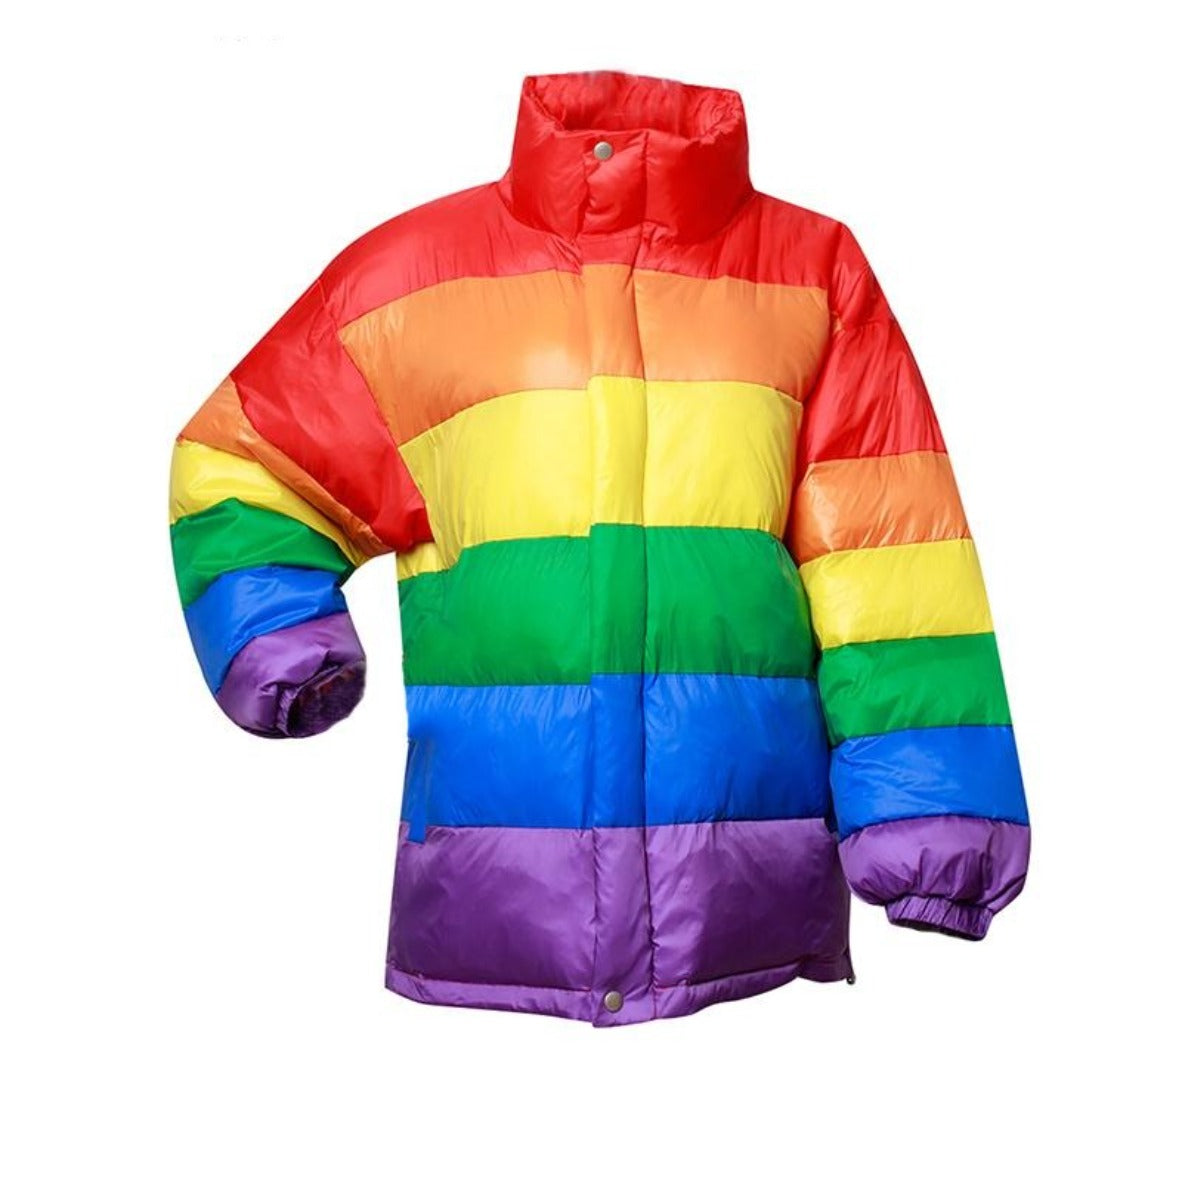 Rainbow Striped Puffer Jacket